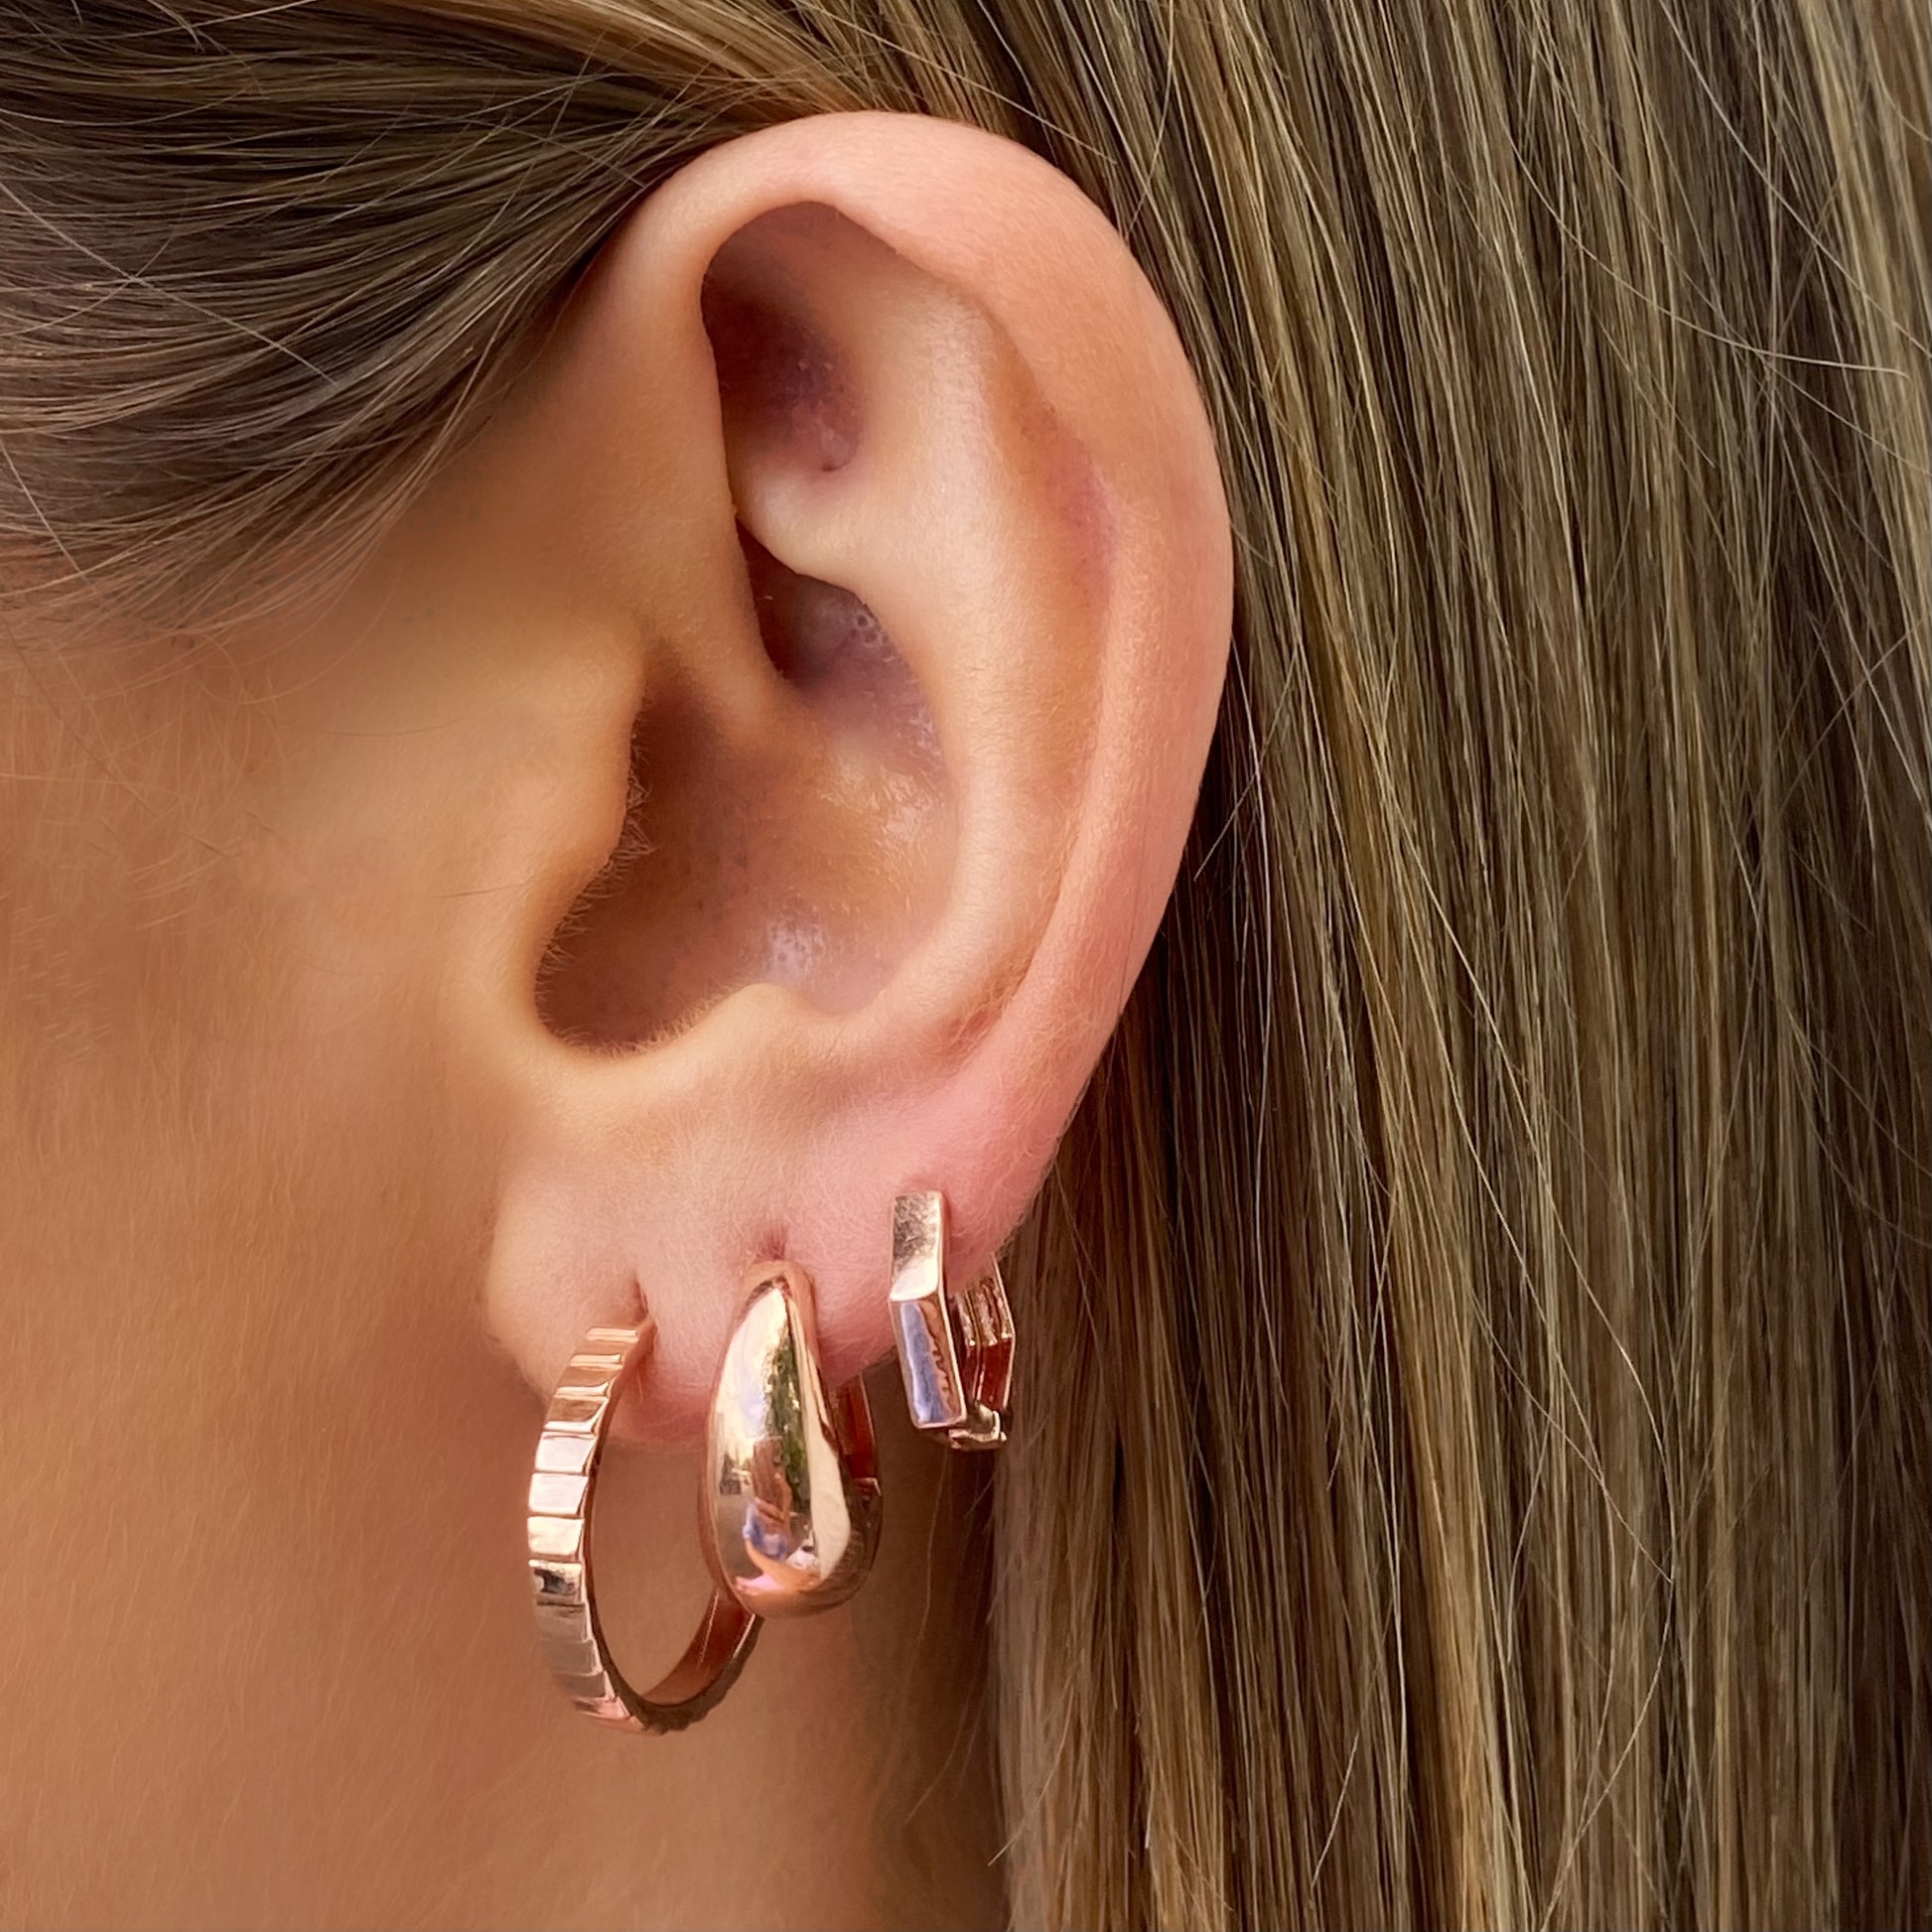 Geometric Huggie Earrings - Rose Gold - Blush & Co.